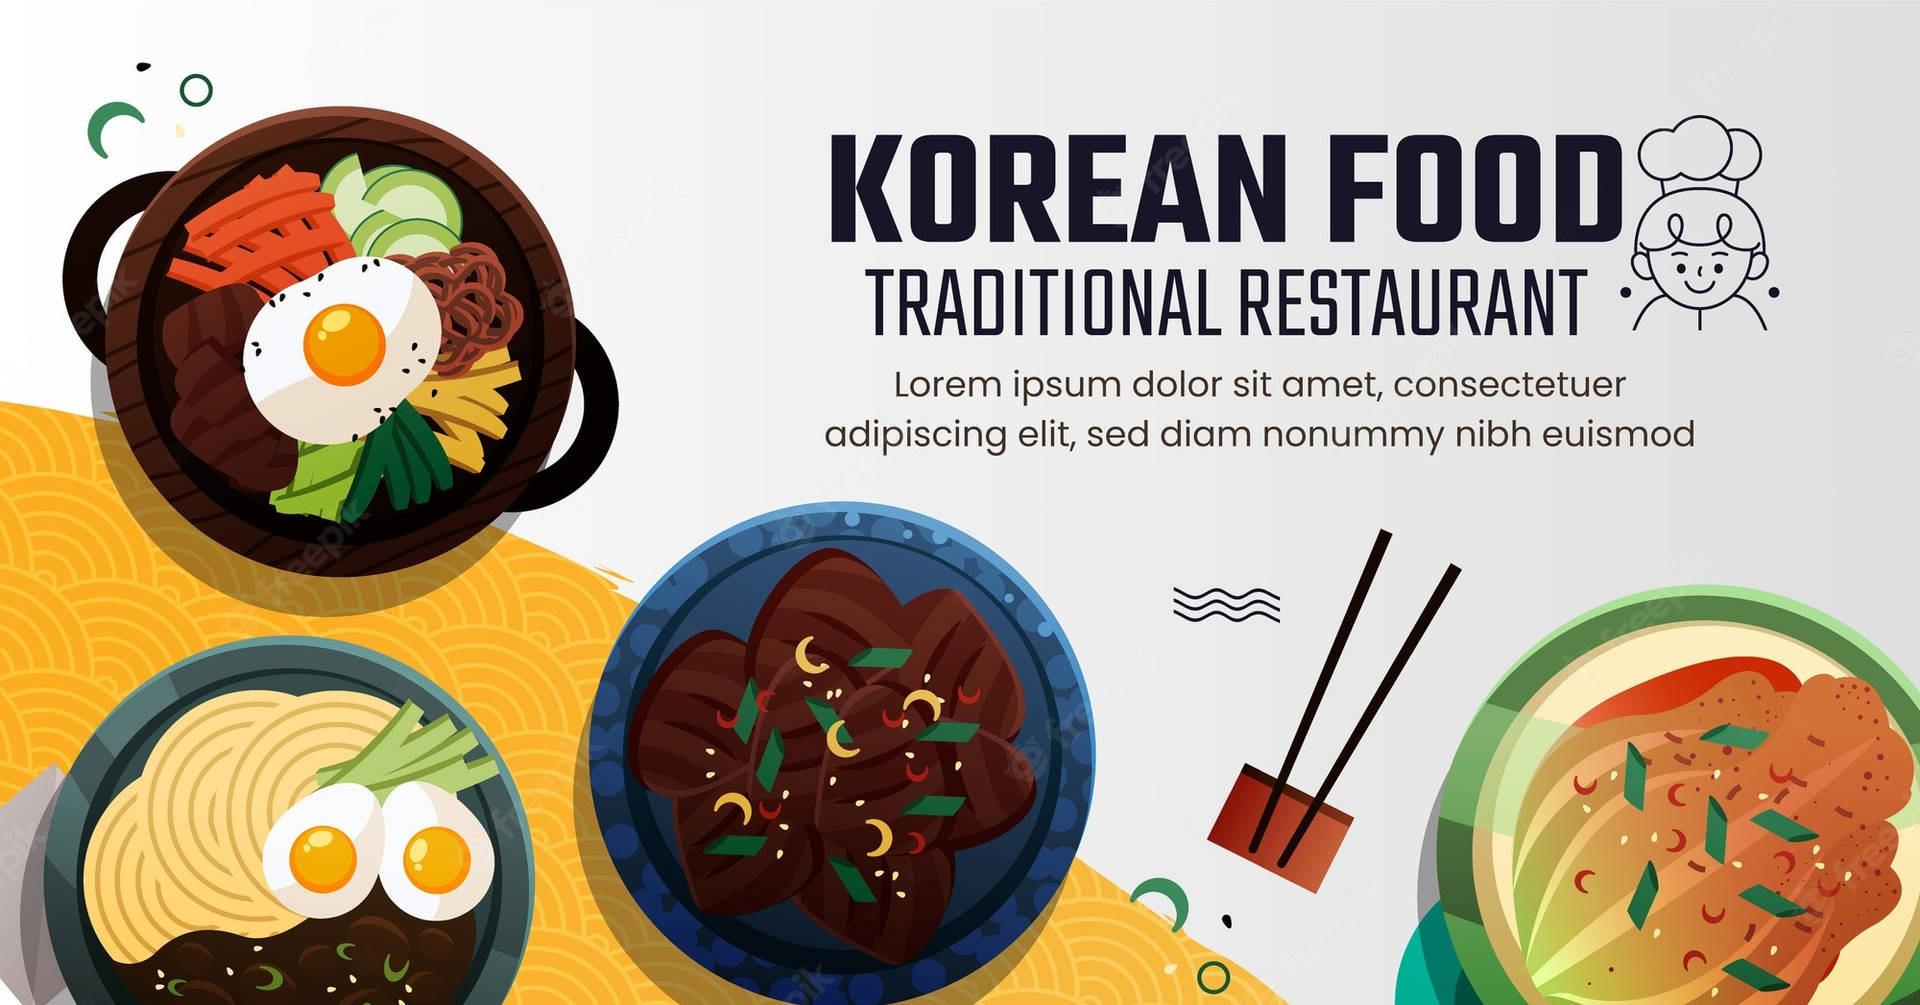 Cartoongerichte Koreanisches Essen Wallpaper